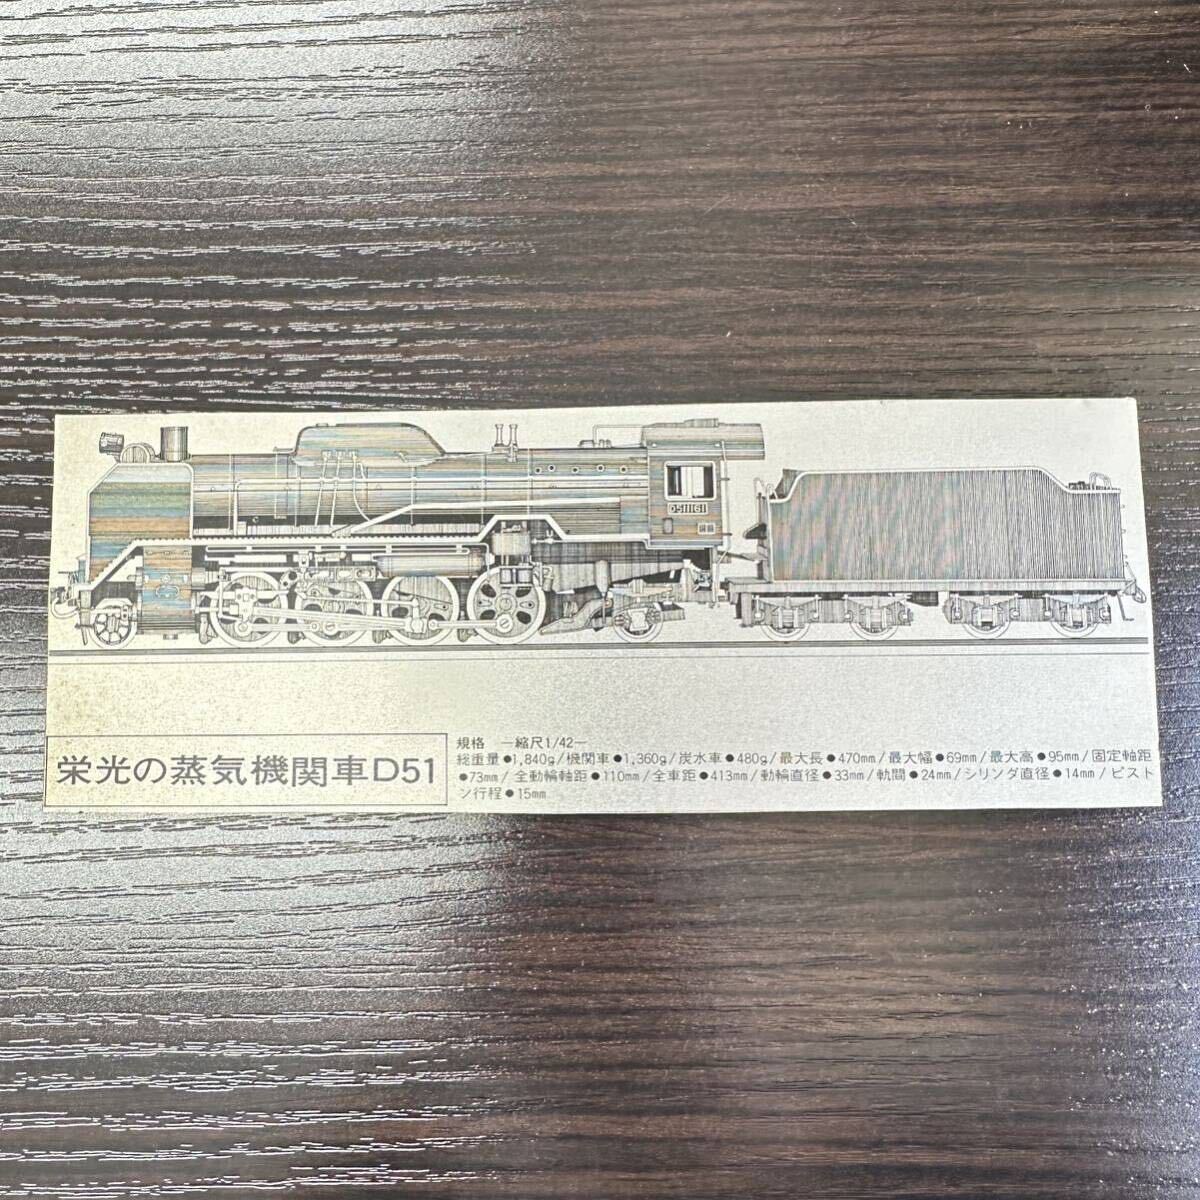 栄光の蒸気機関車D51/鉄道模型 /D511161/ D51形/物置/台座ケース付き_画像3